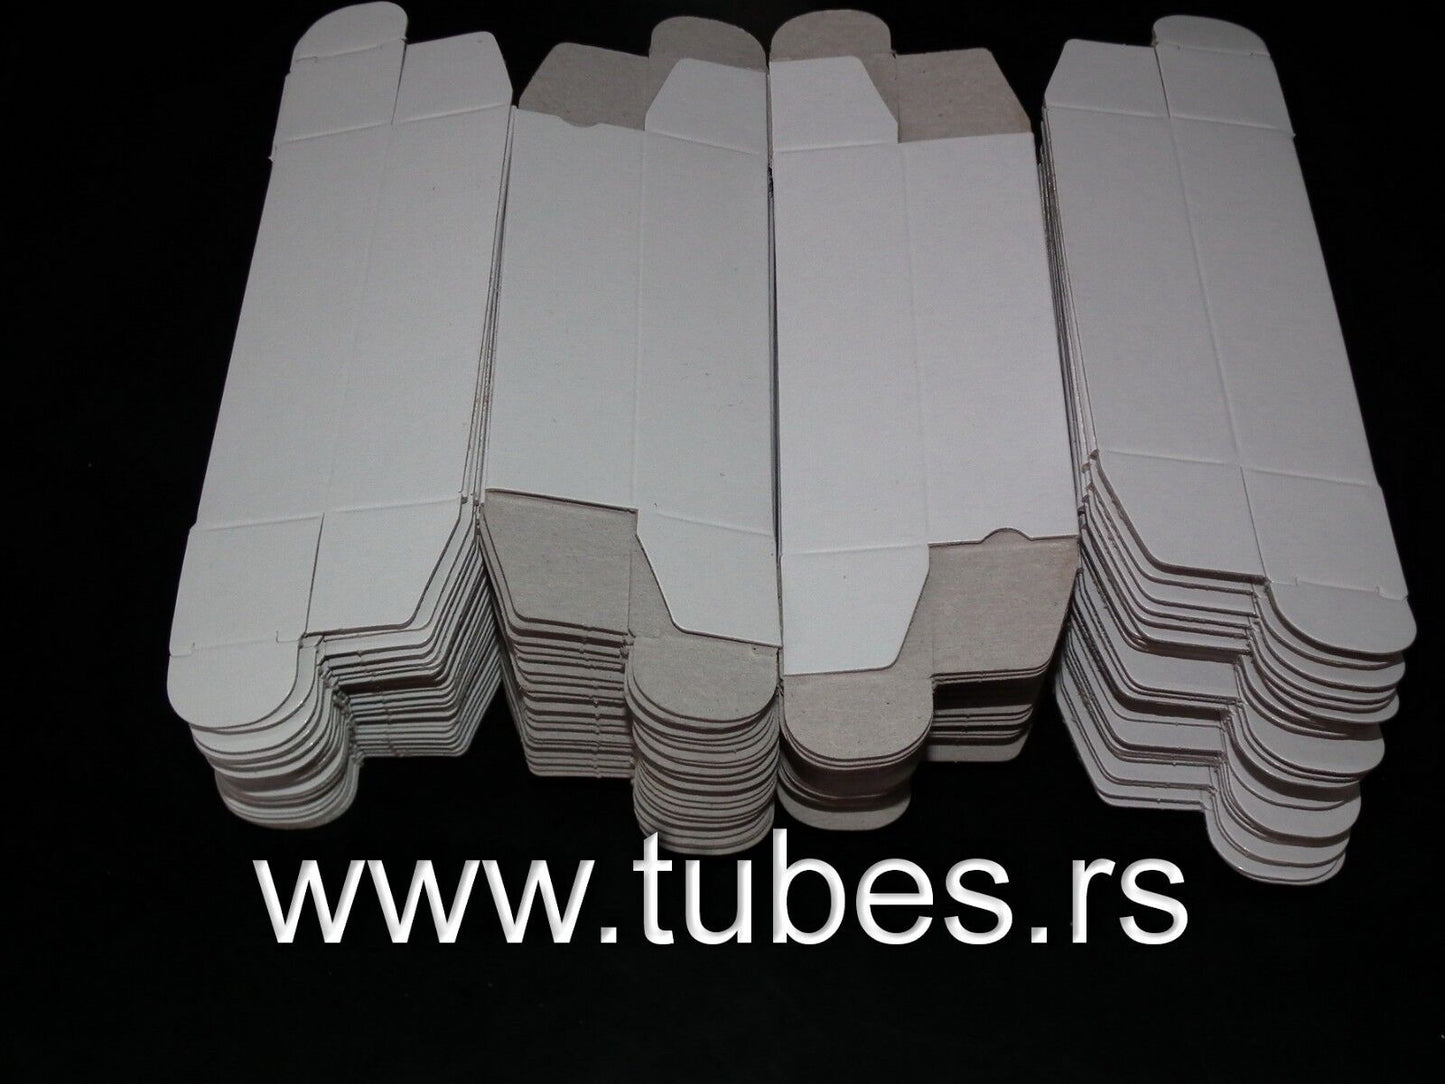 850 pcs White Tube Boxes for Audio tubes ECC81 ECC83 E88CC EL84 ECC803S Röhren